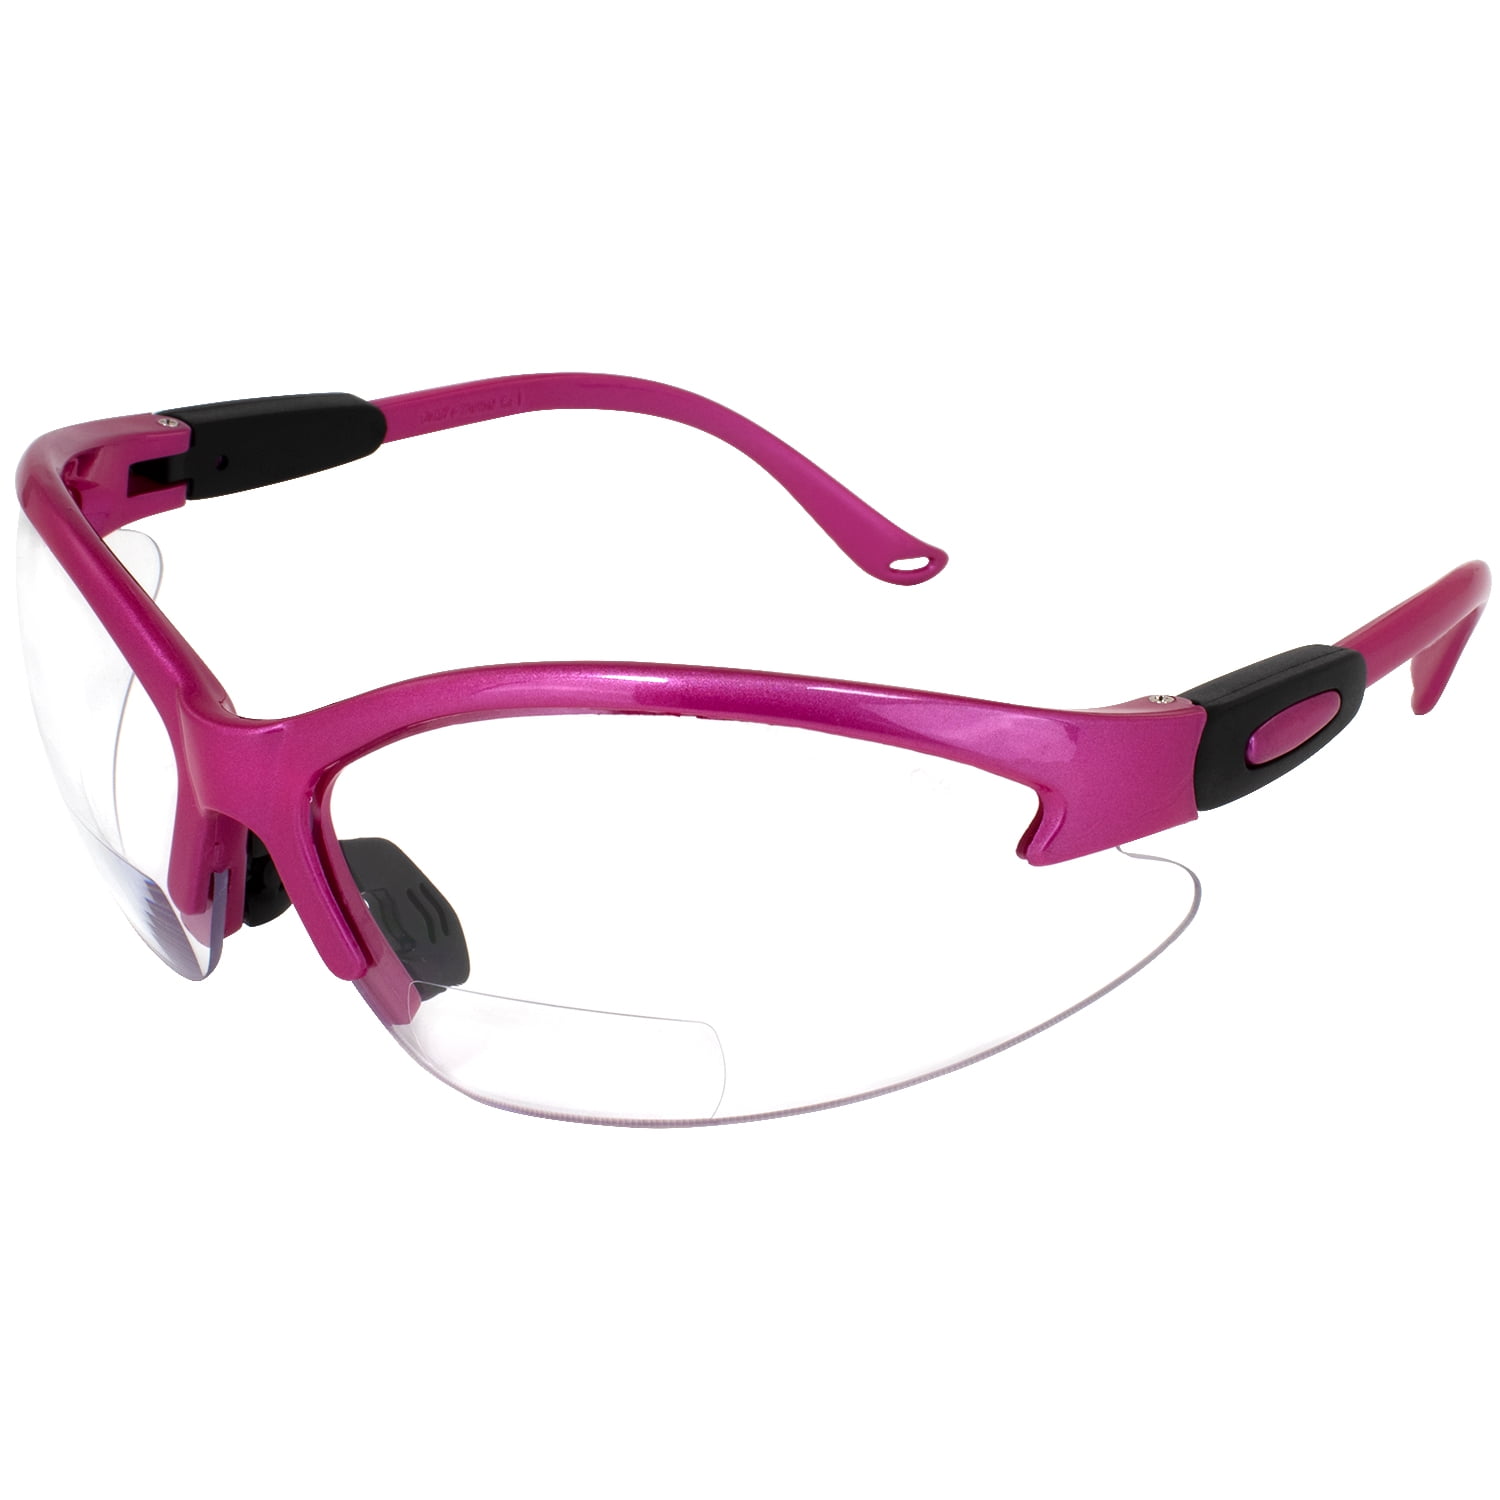 CAMOYL Pink Nylon Frame/Yellow Lens Global Vision Digital Camo Safety Glasses